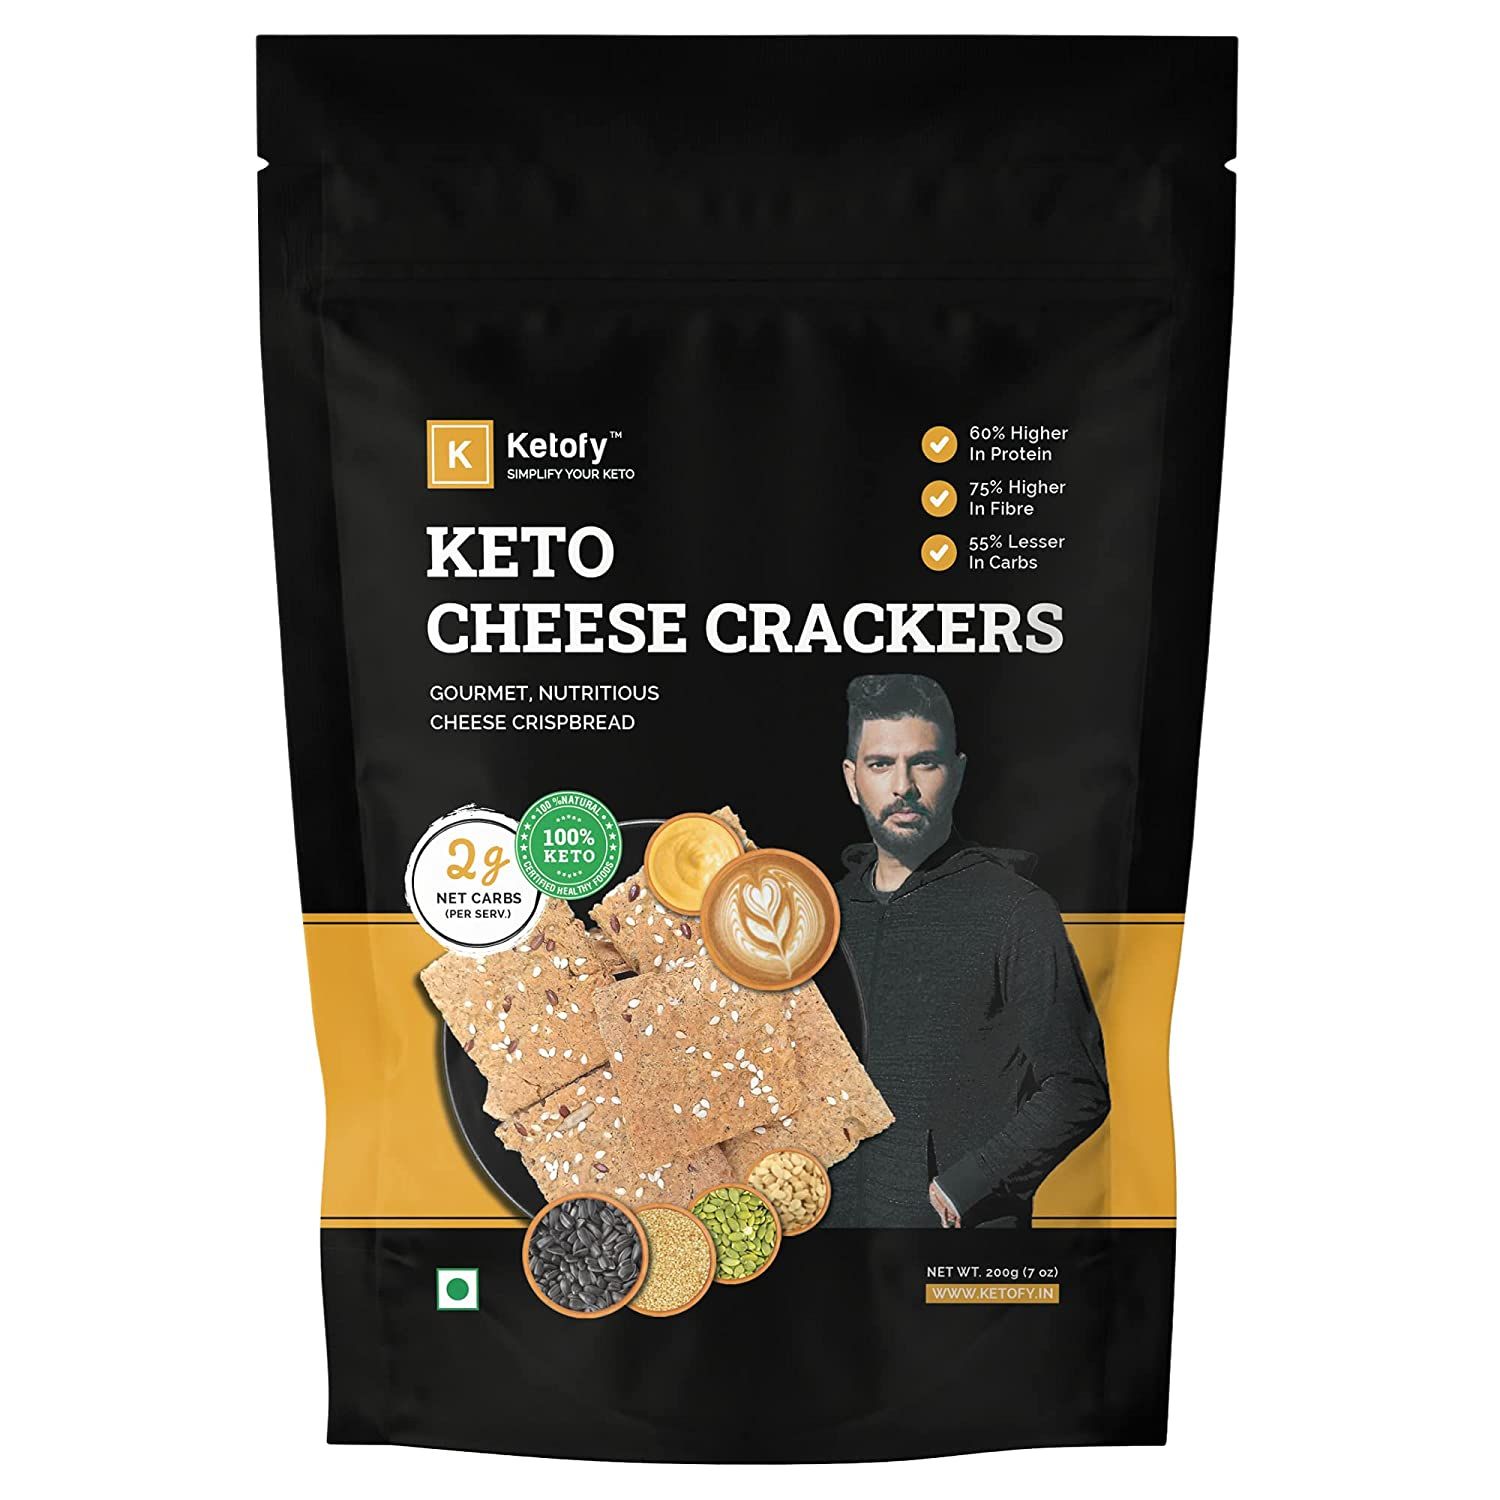 Ketofy Cheese Crackers Image